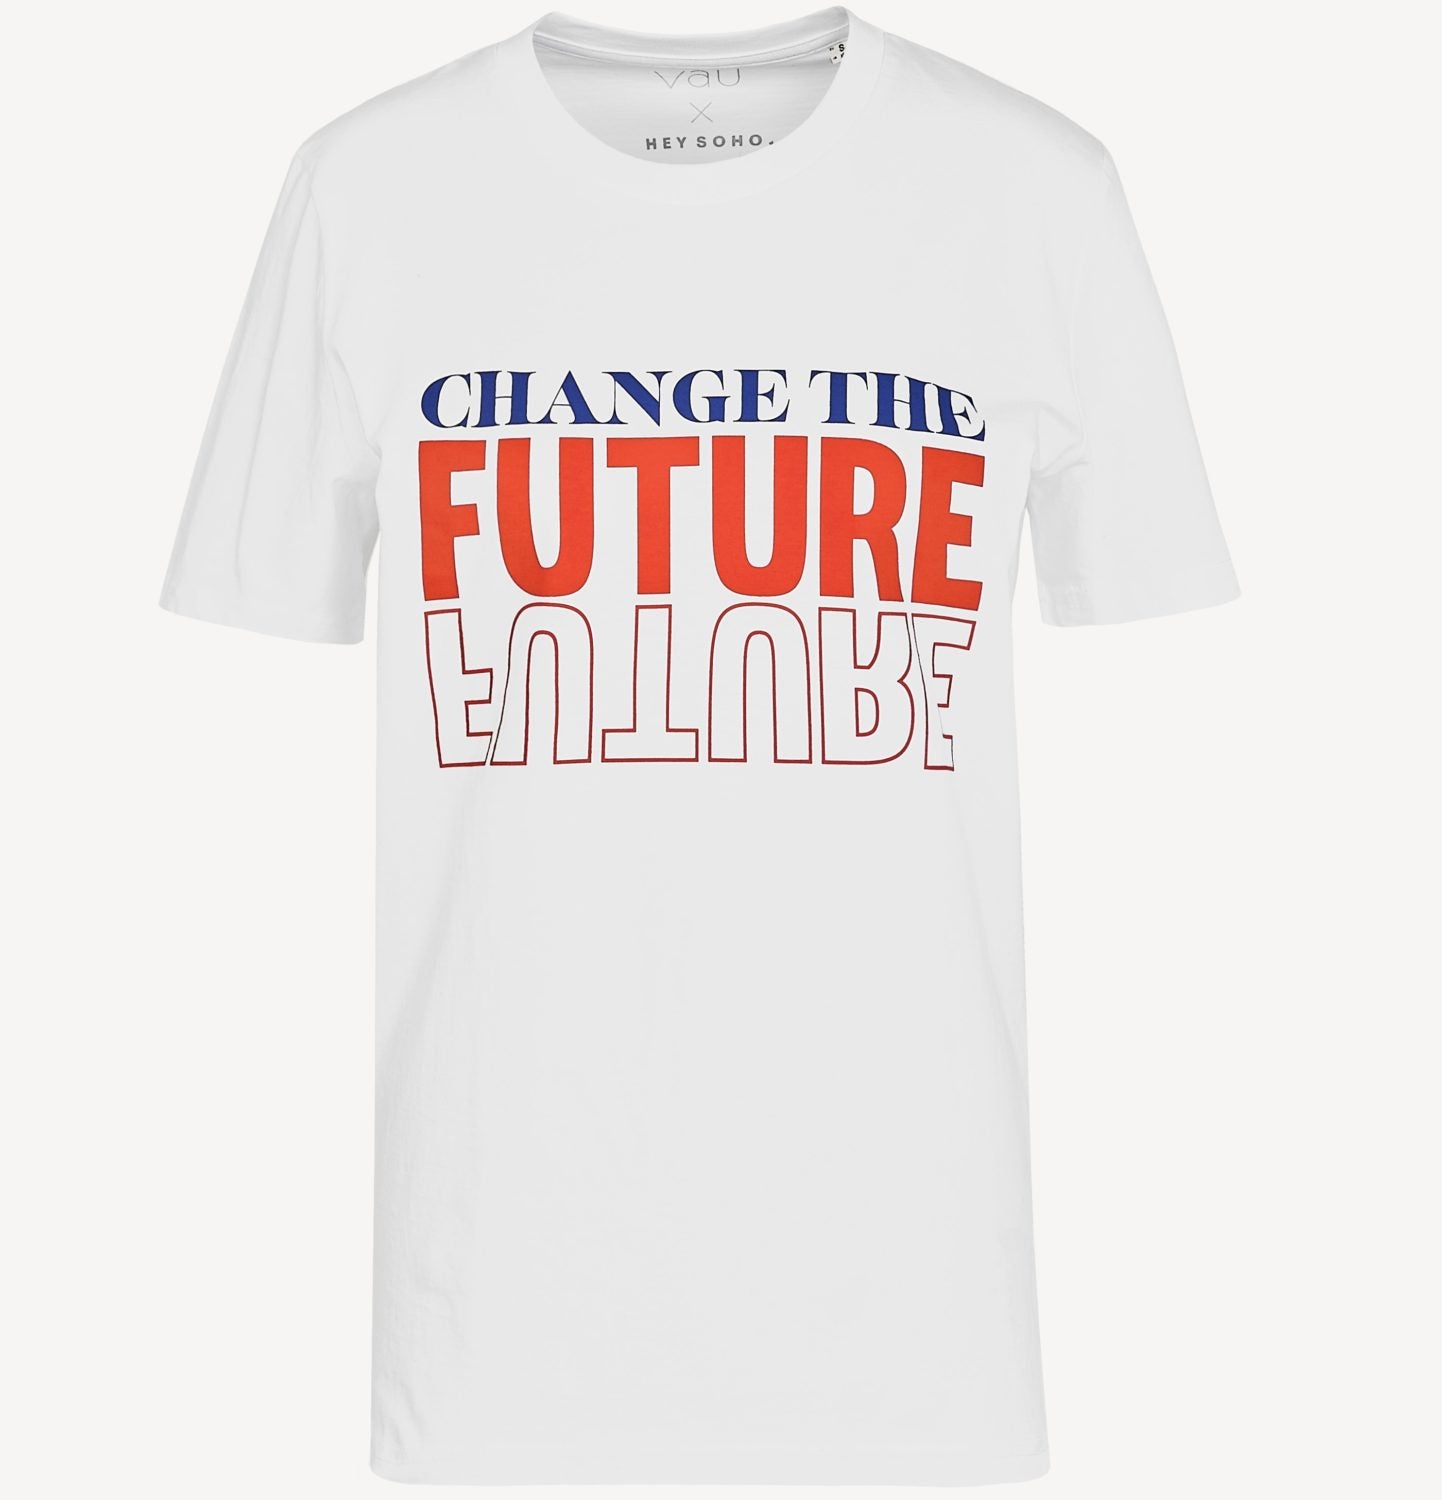 Hey Soho Change the future